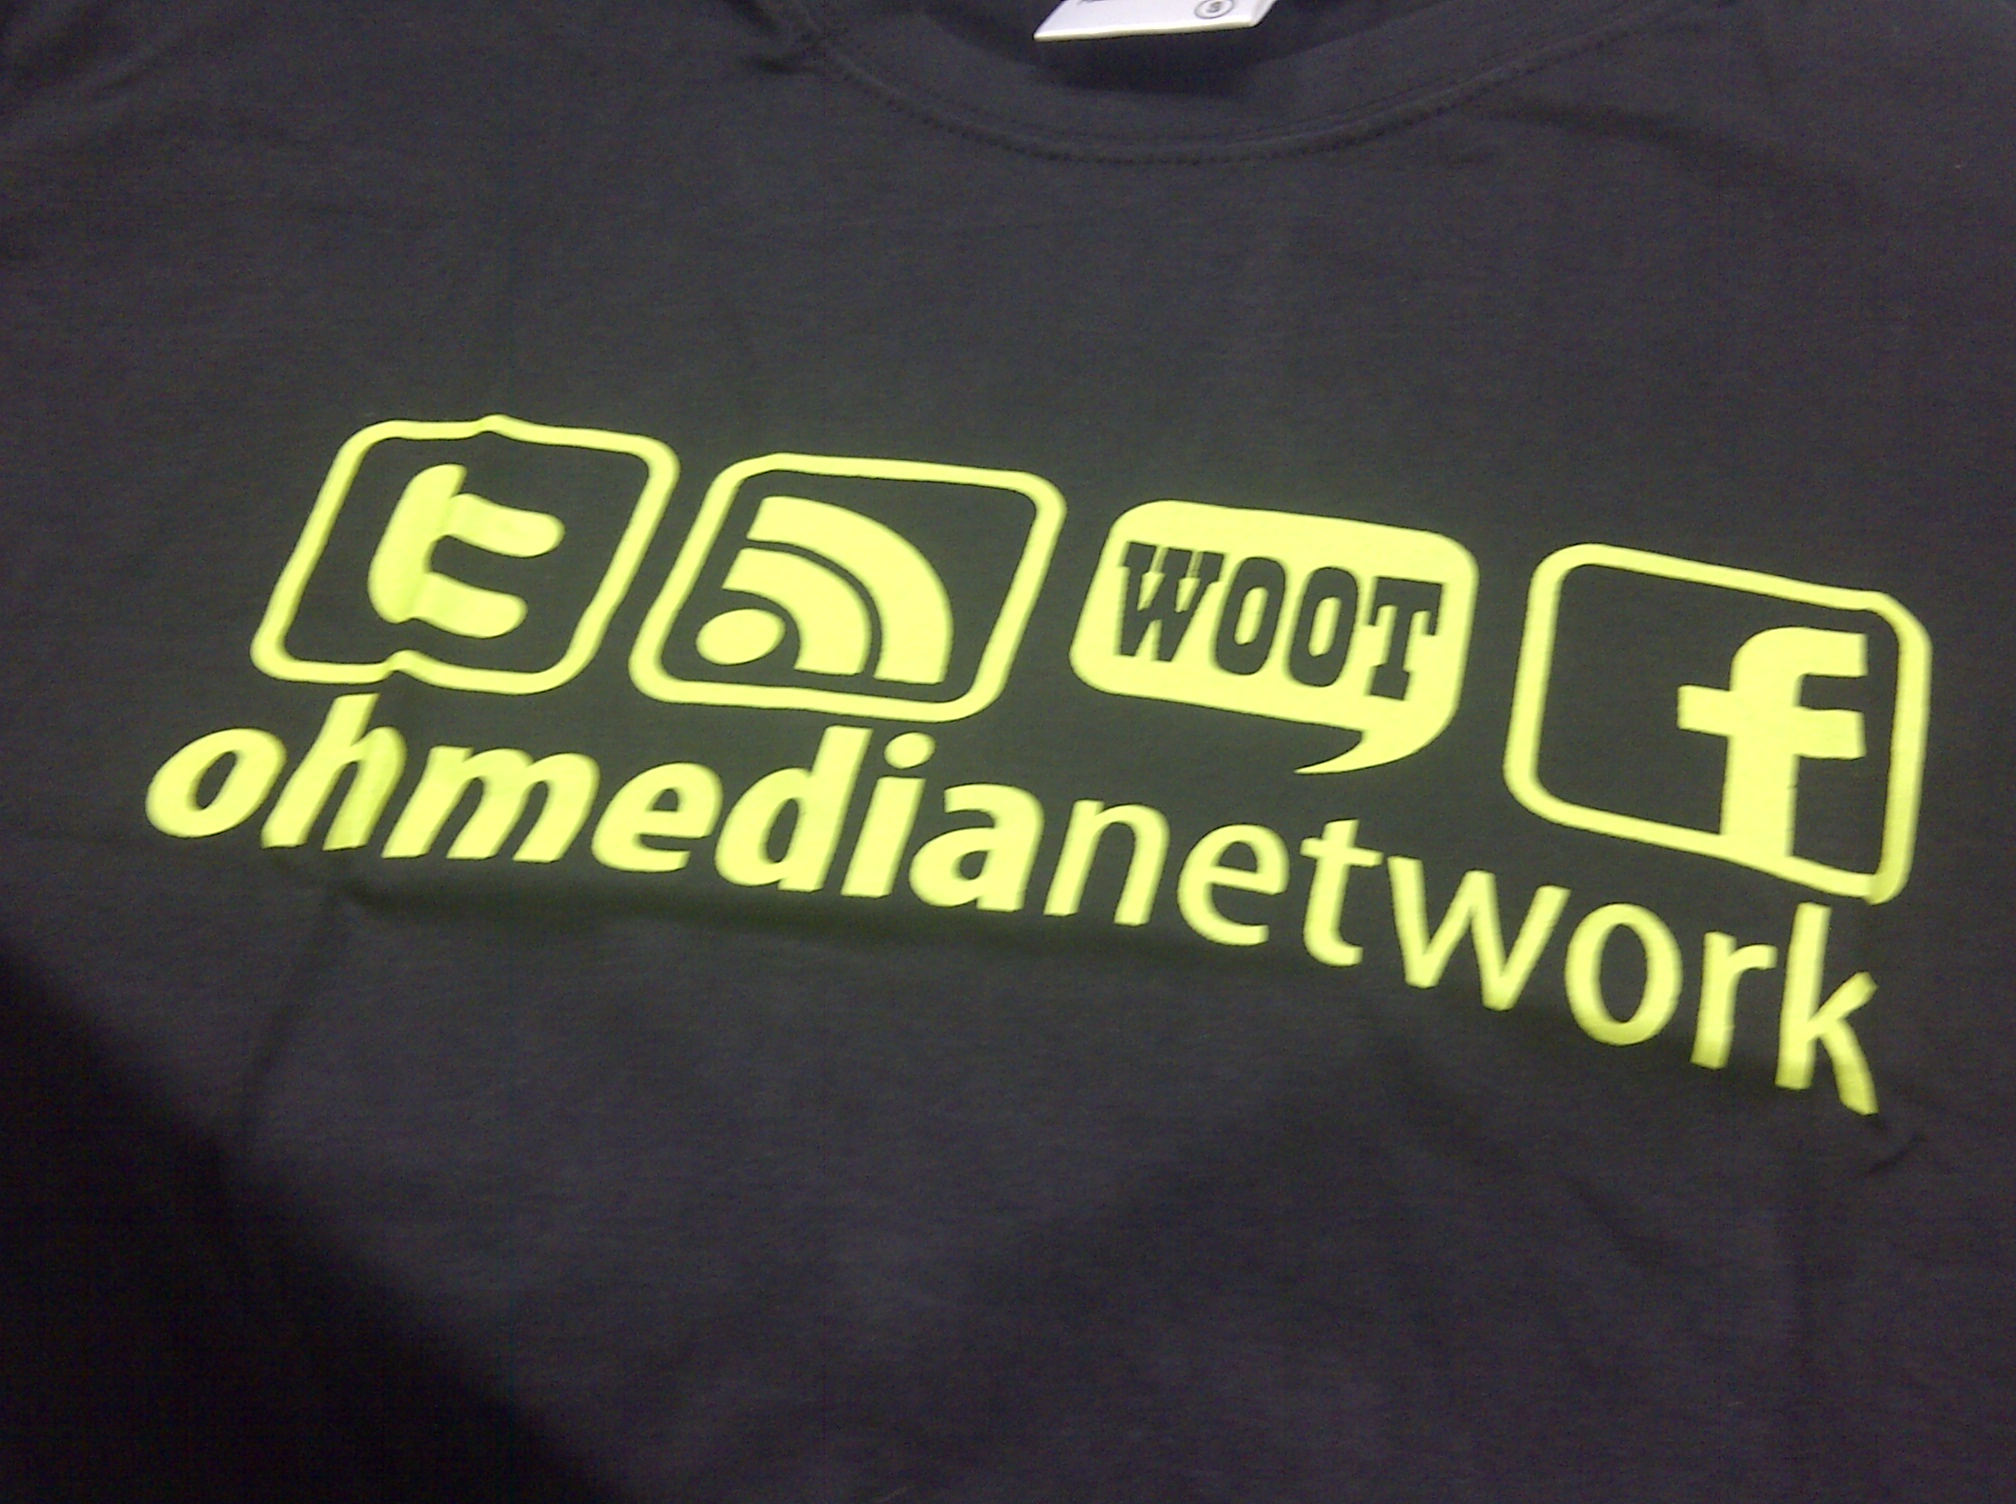 Oh! Media Network